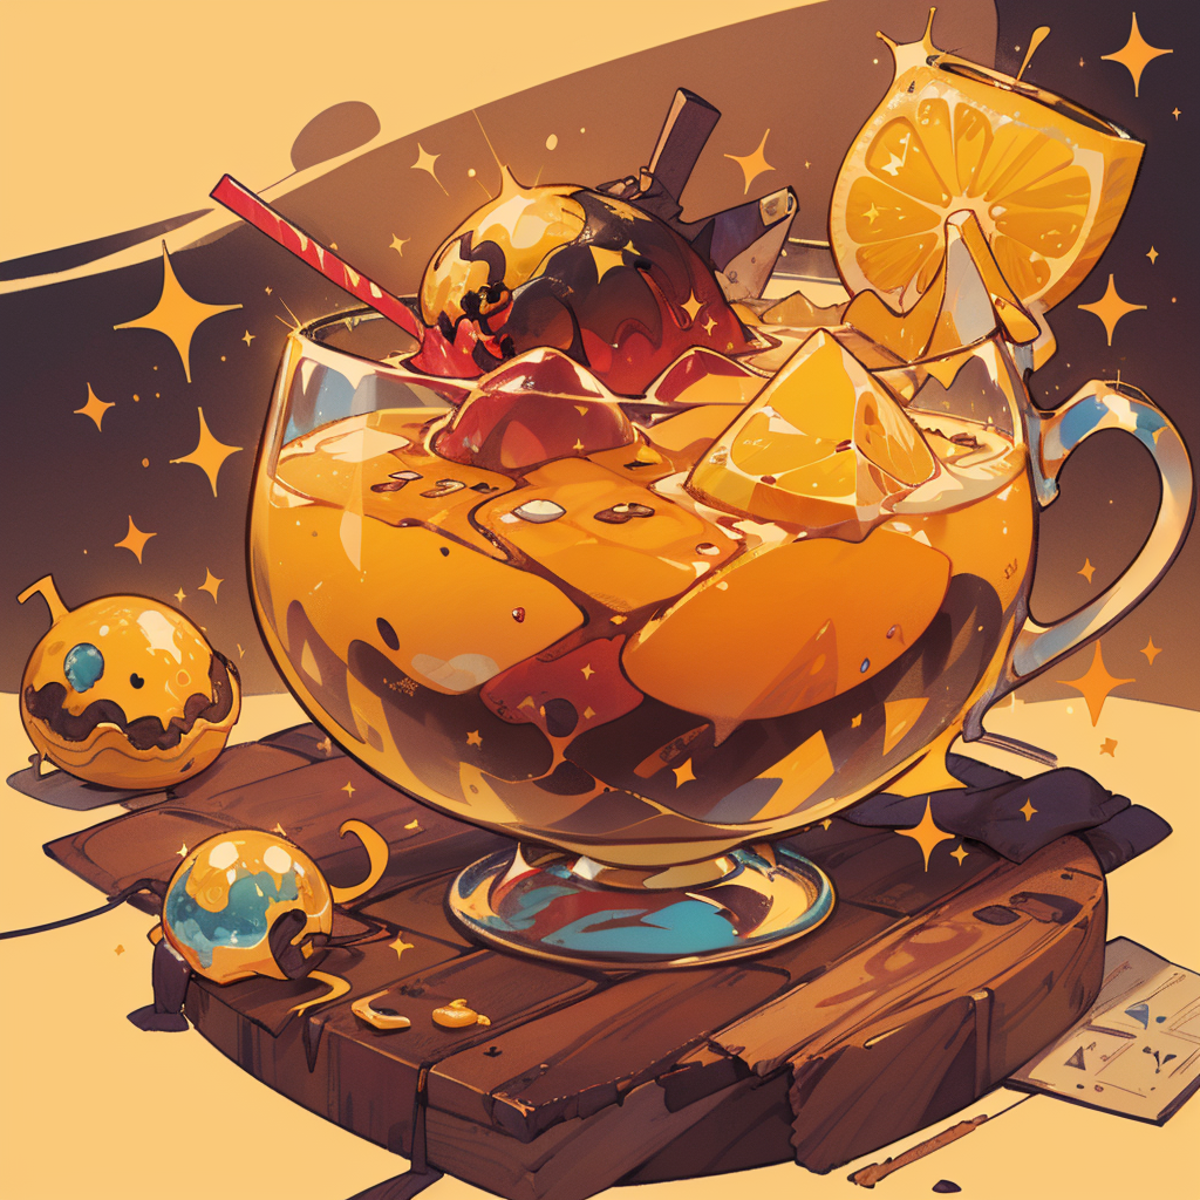 Magic tea image by missfidonyo